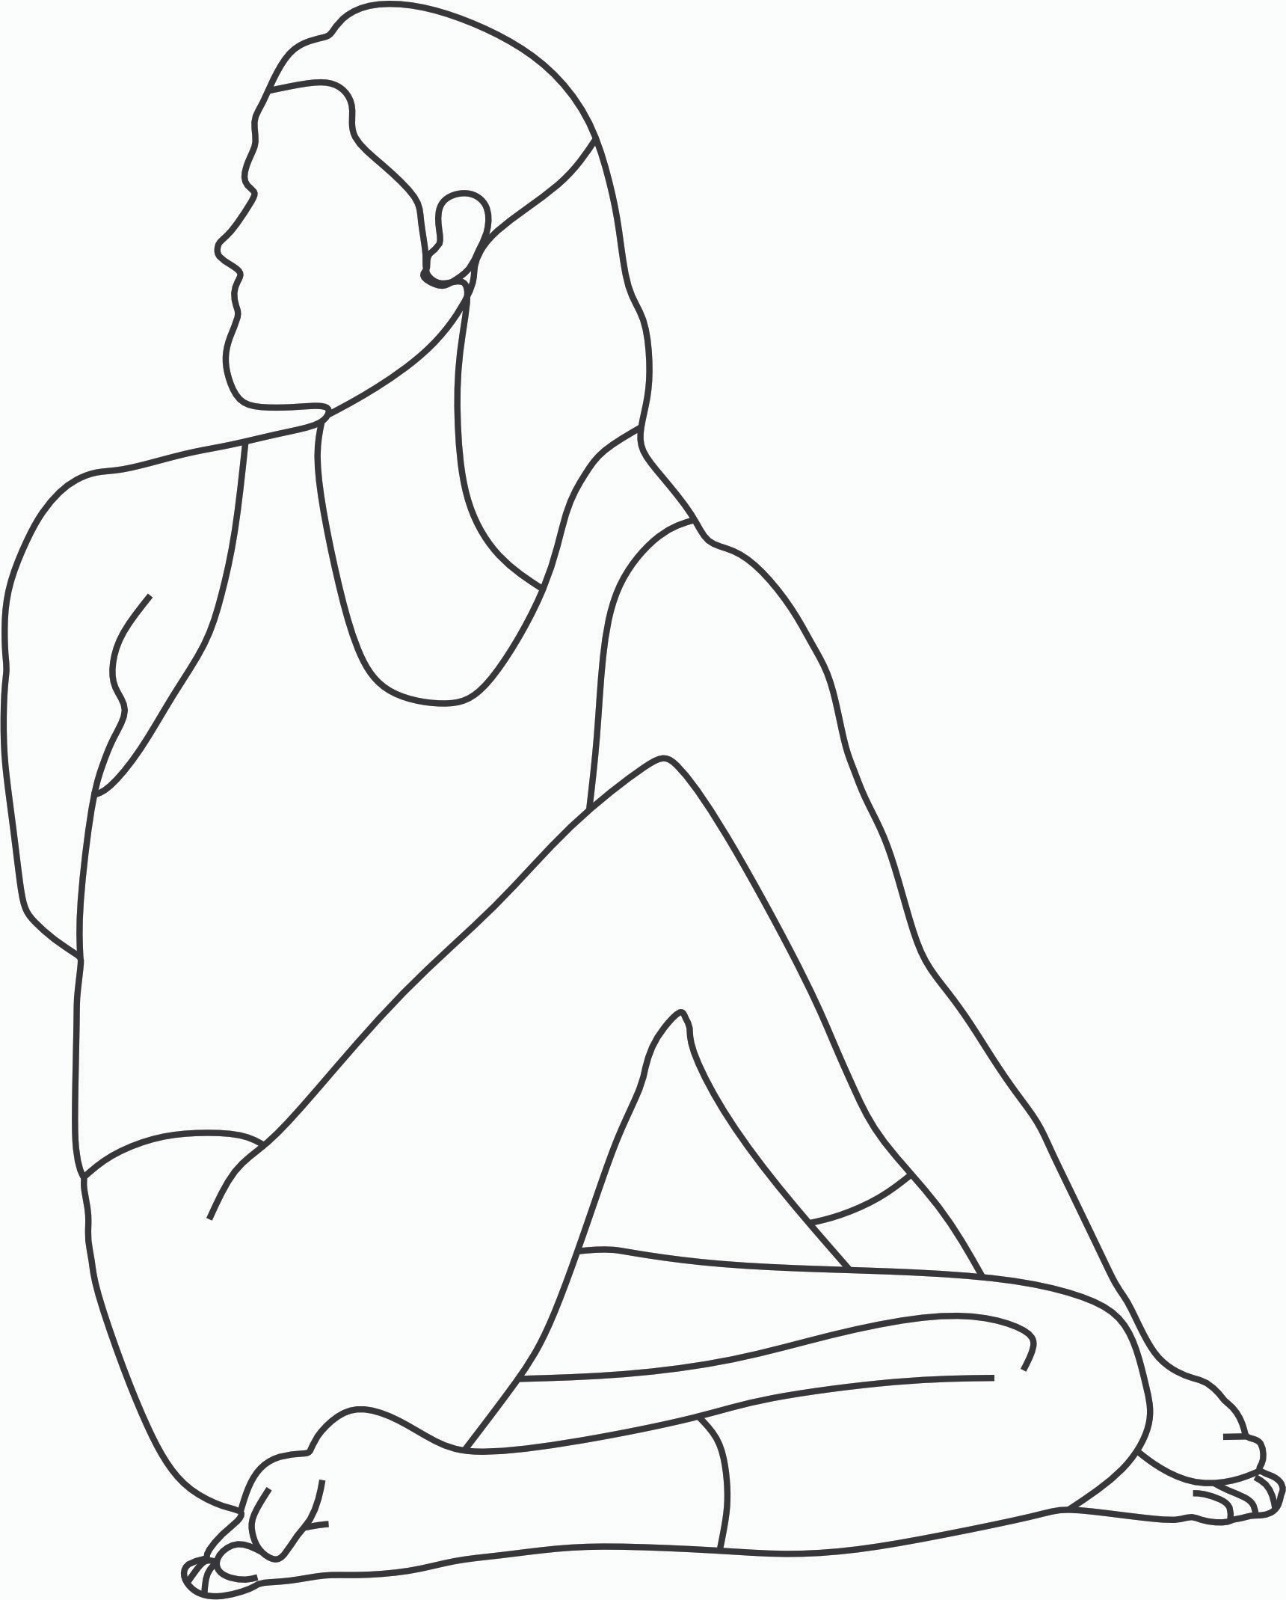 Seated Half Spinal Twist (Ardha Matsyendrasana) Steps, Health Benefits and Precautions